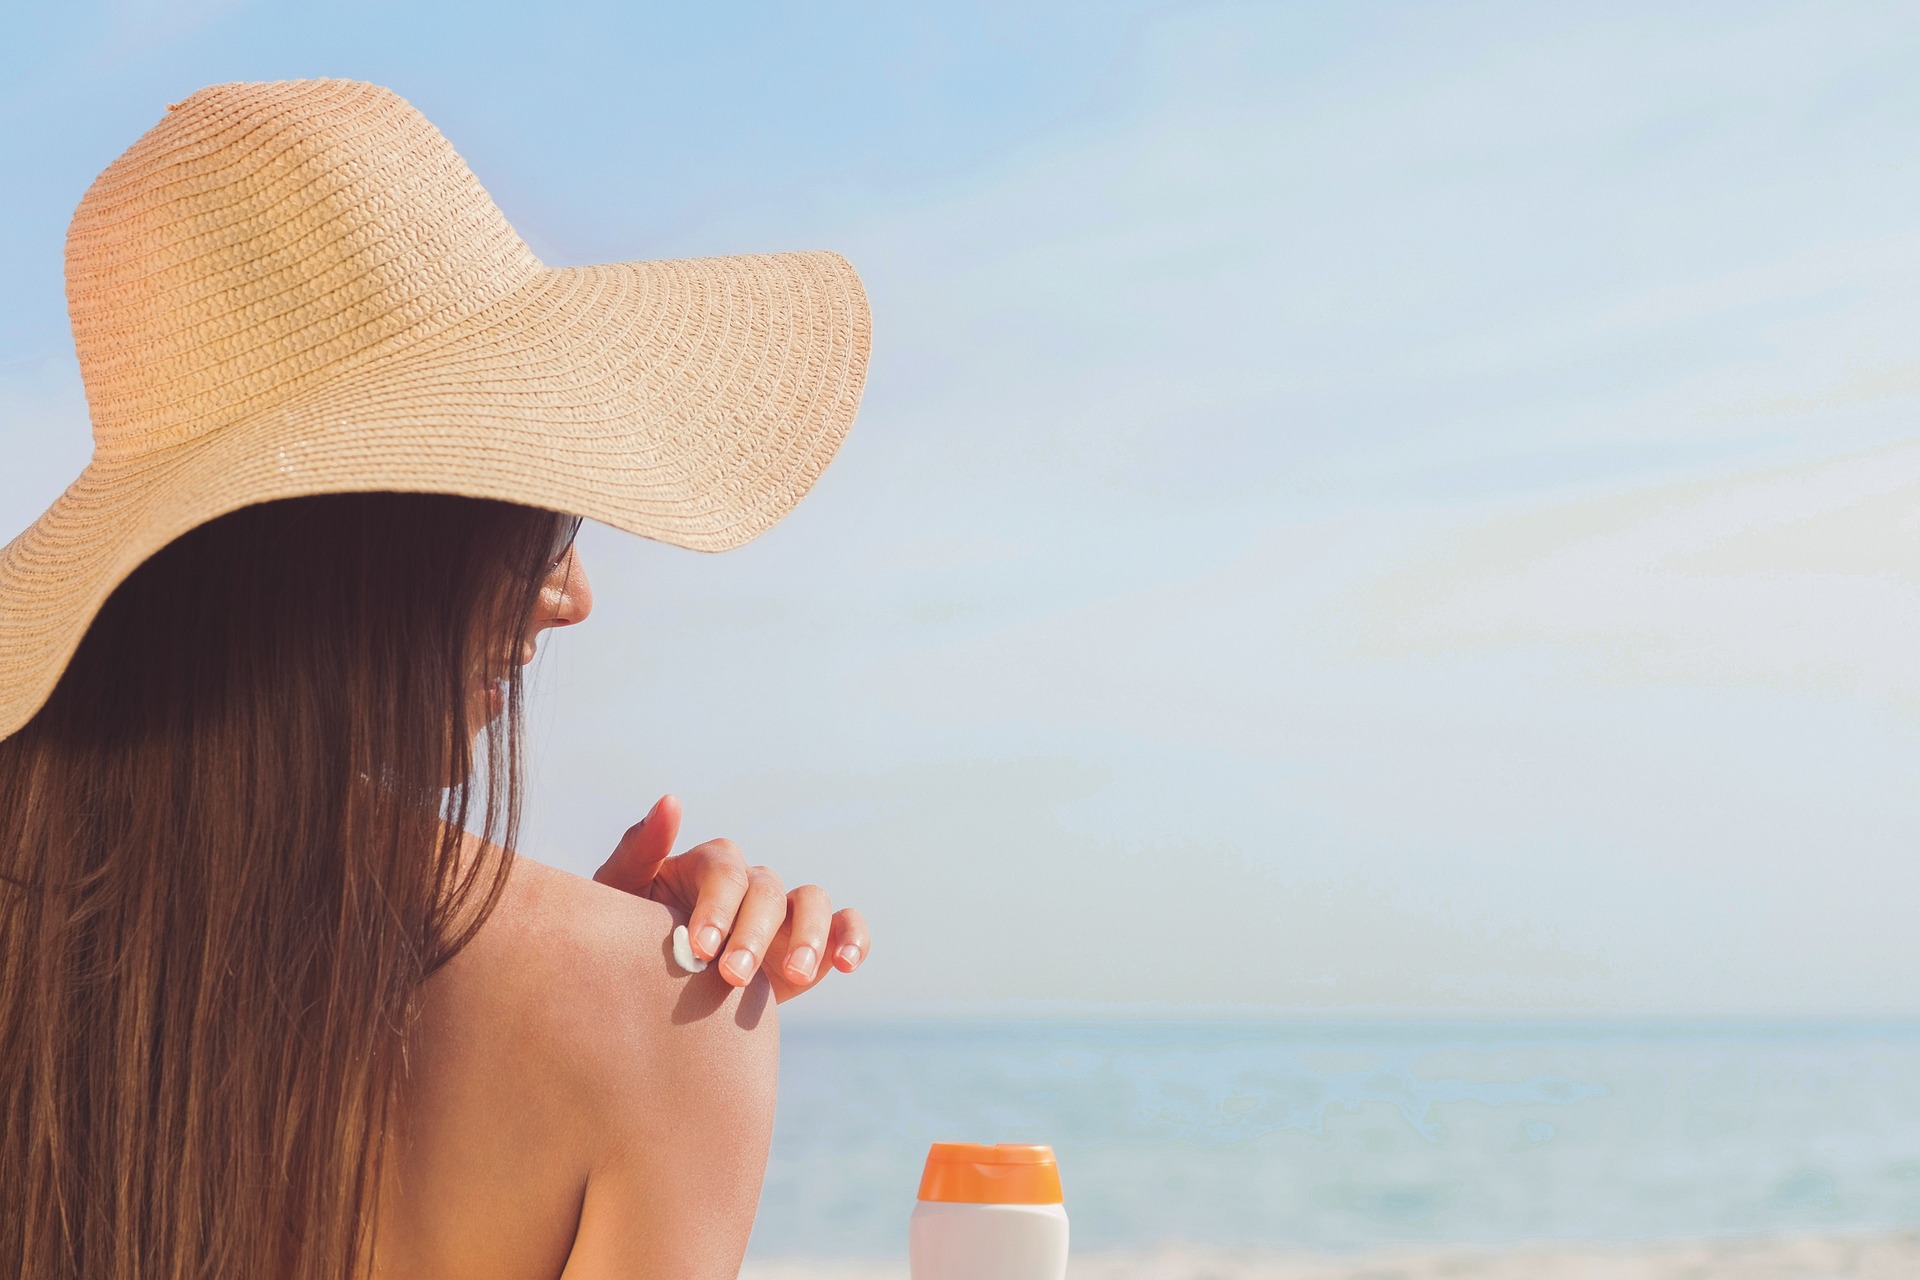 Studi: Penggunaan sunscreen dapat menjaga fungsi pembuluh darah